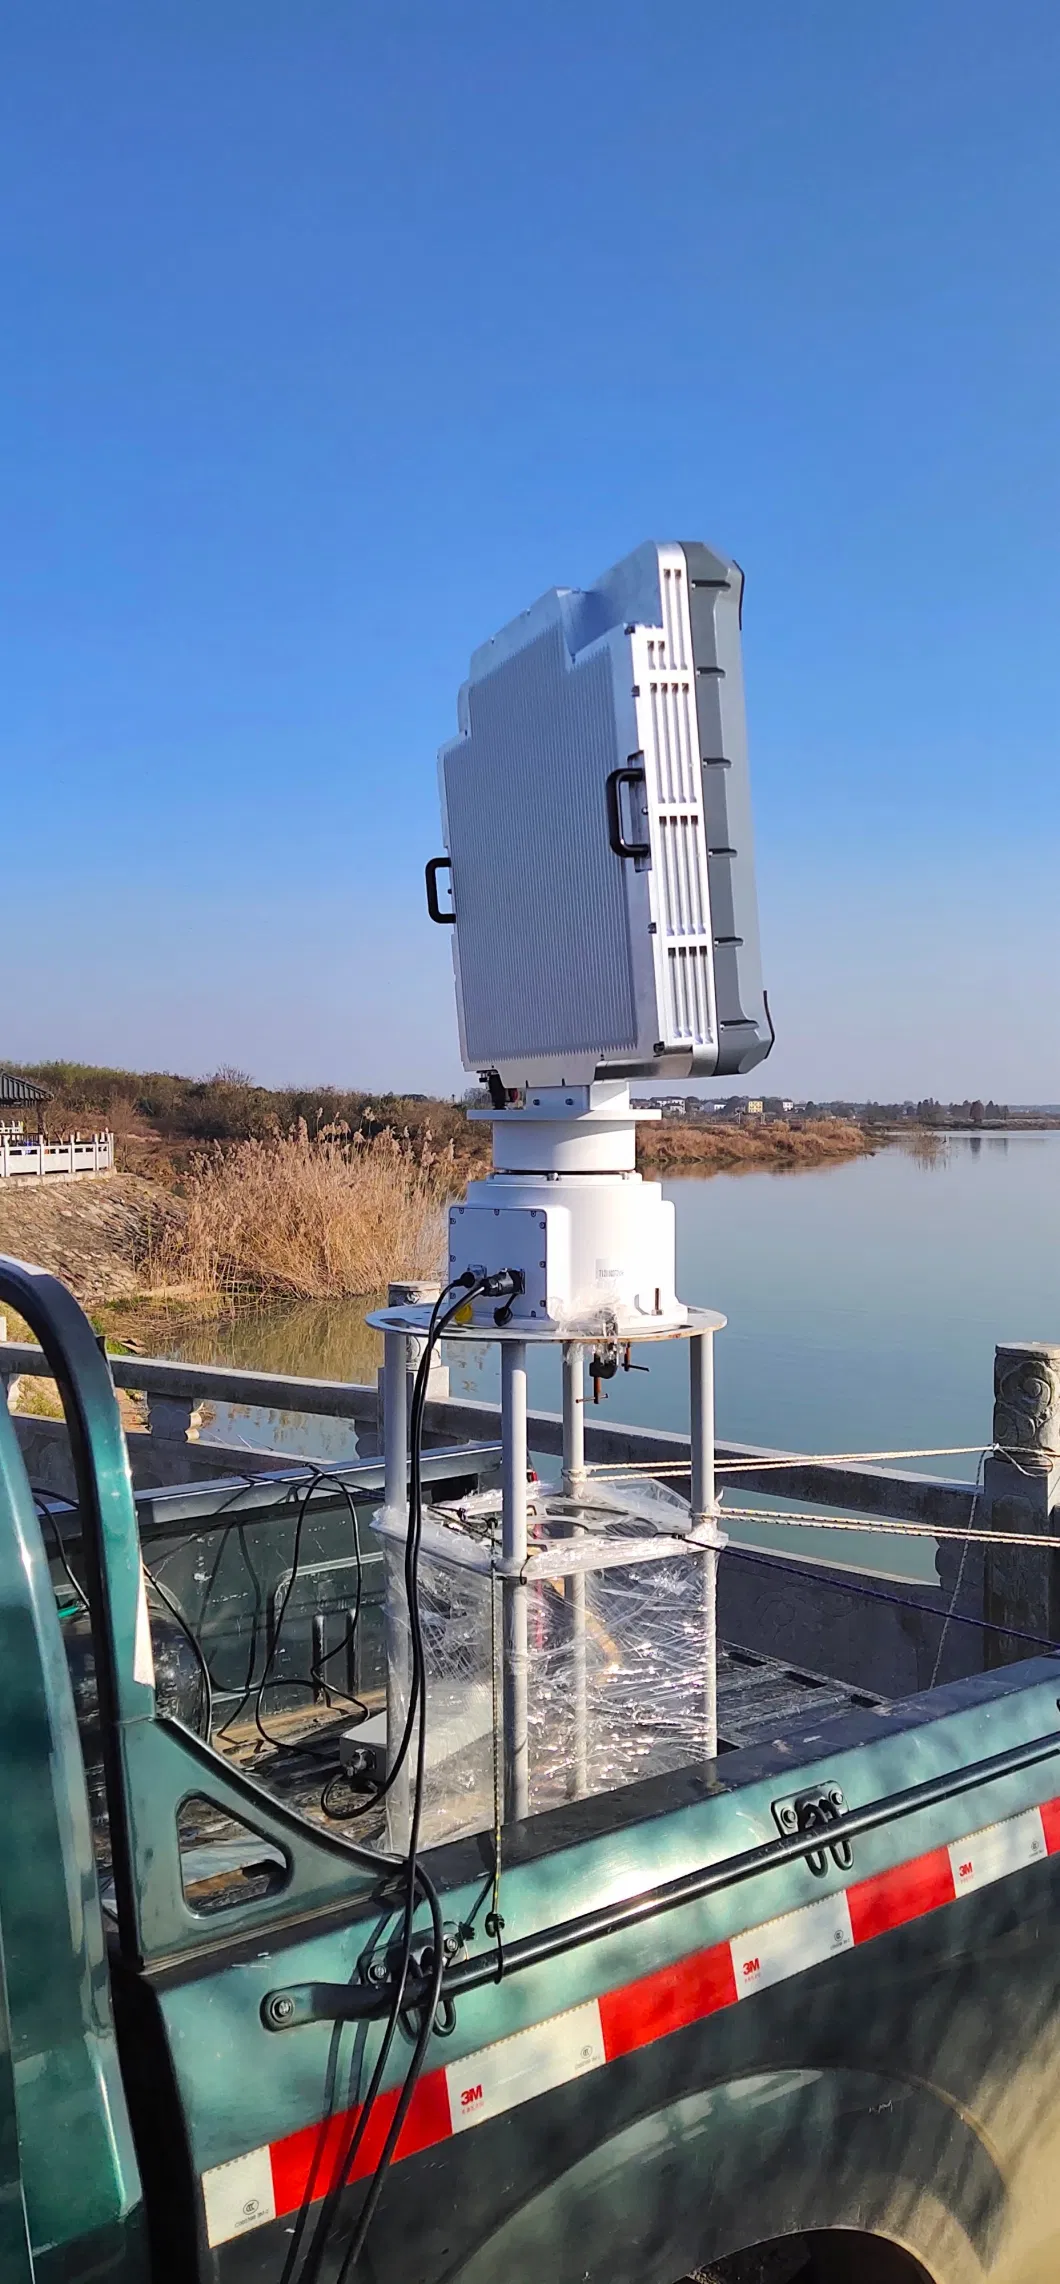 X-Band 3D Digital-Array Radar Technology with High Track Accuracy